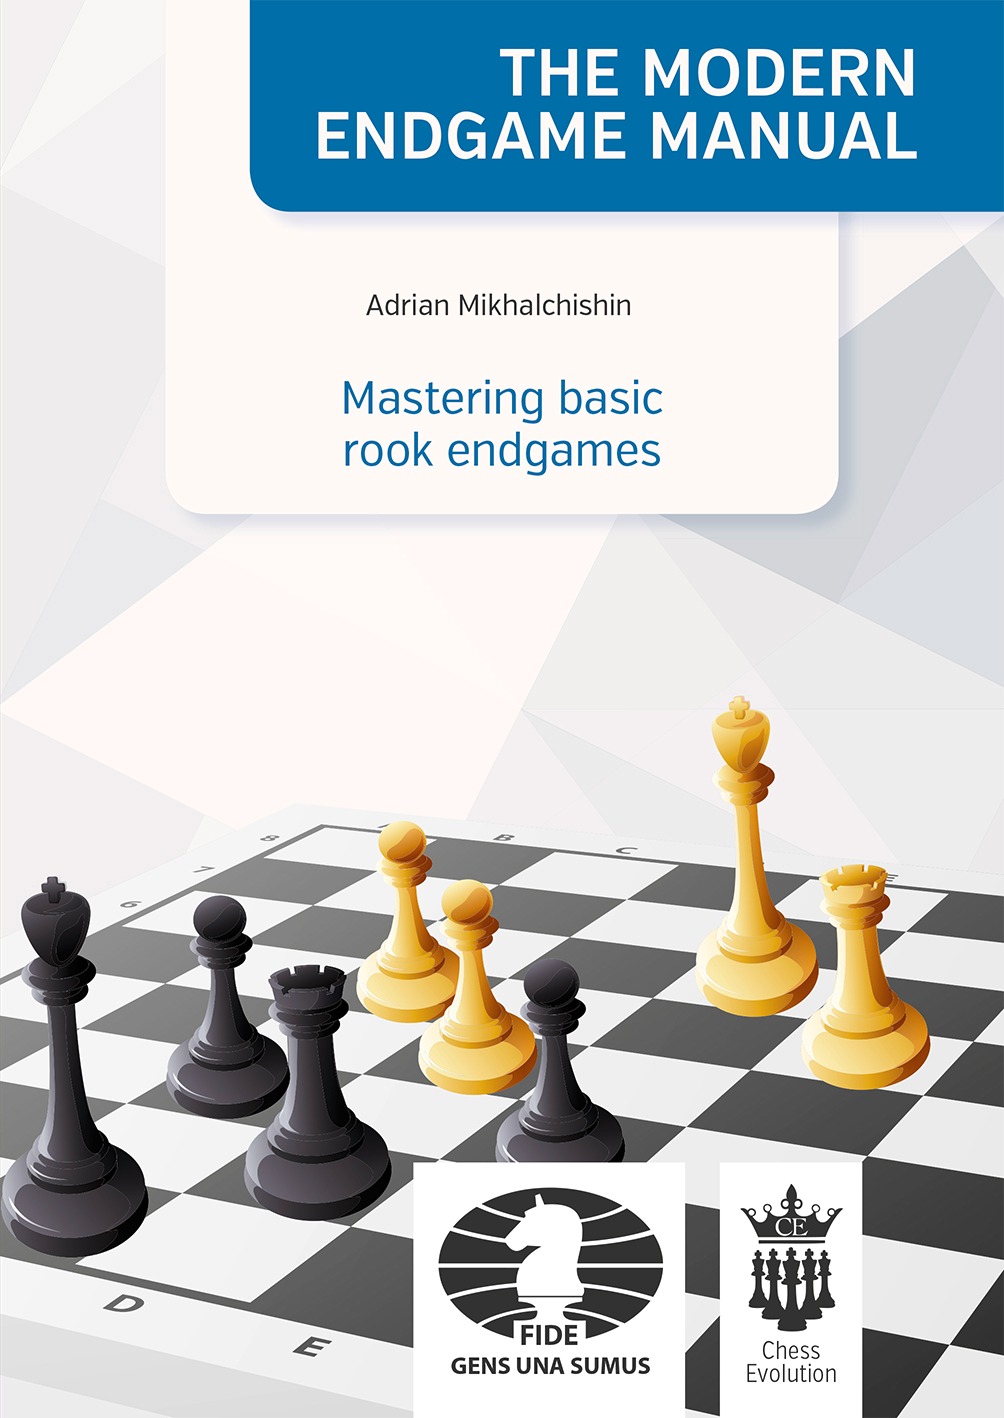 The Modern Endgame Manual - Mastering Basic Rook Endgames - Adrian Mikhalchishin